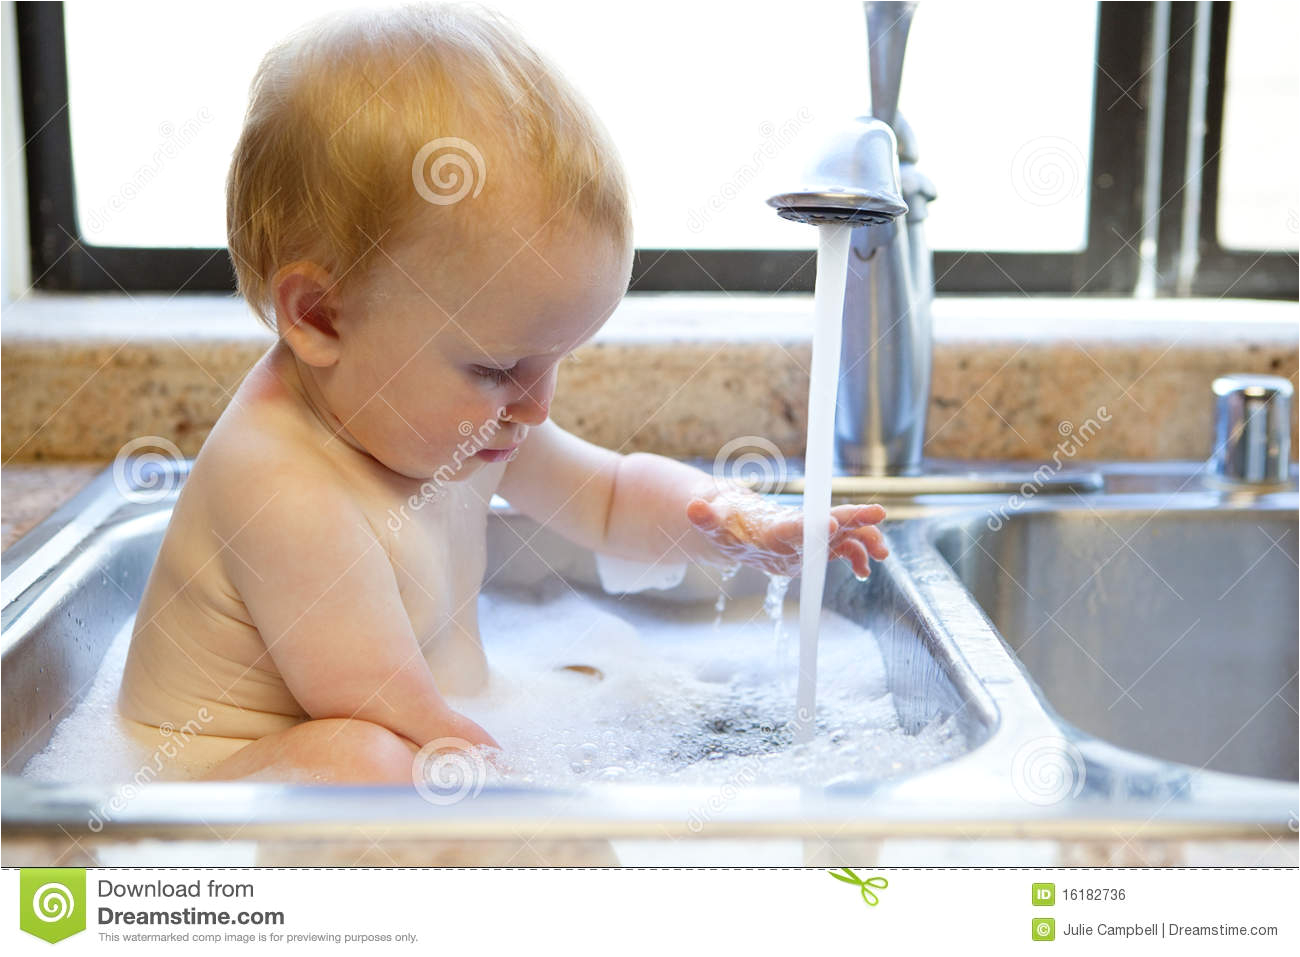 royalty free stock image baby taking bath sink image